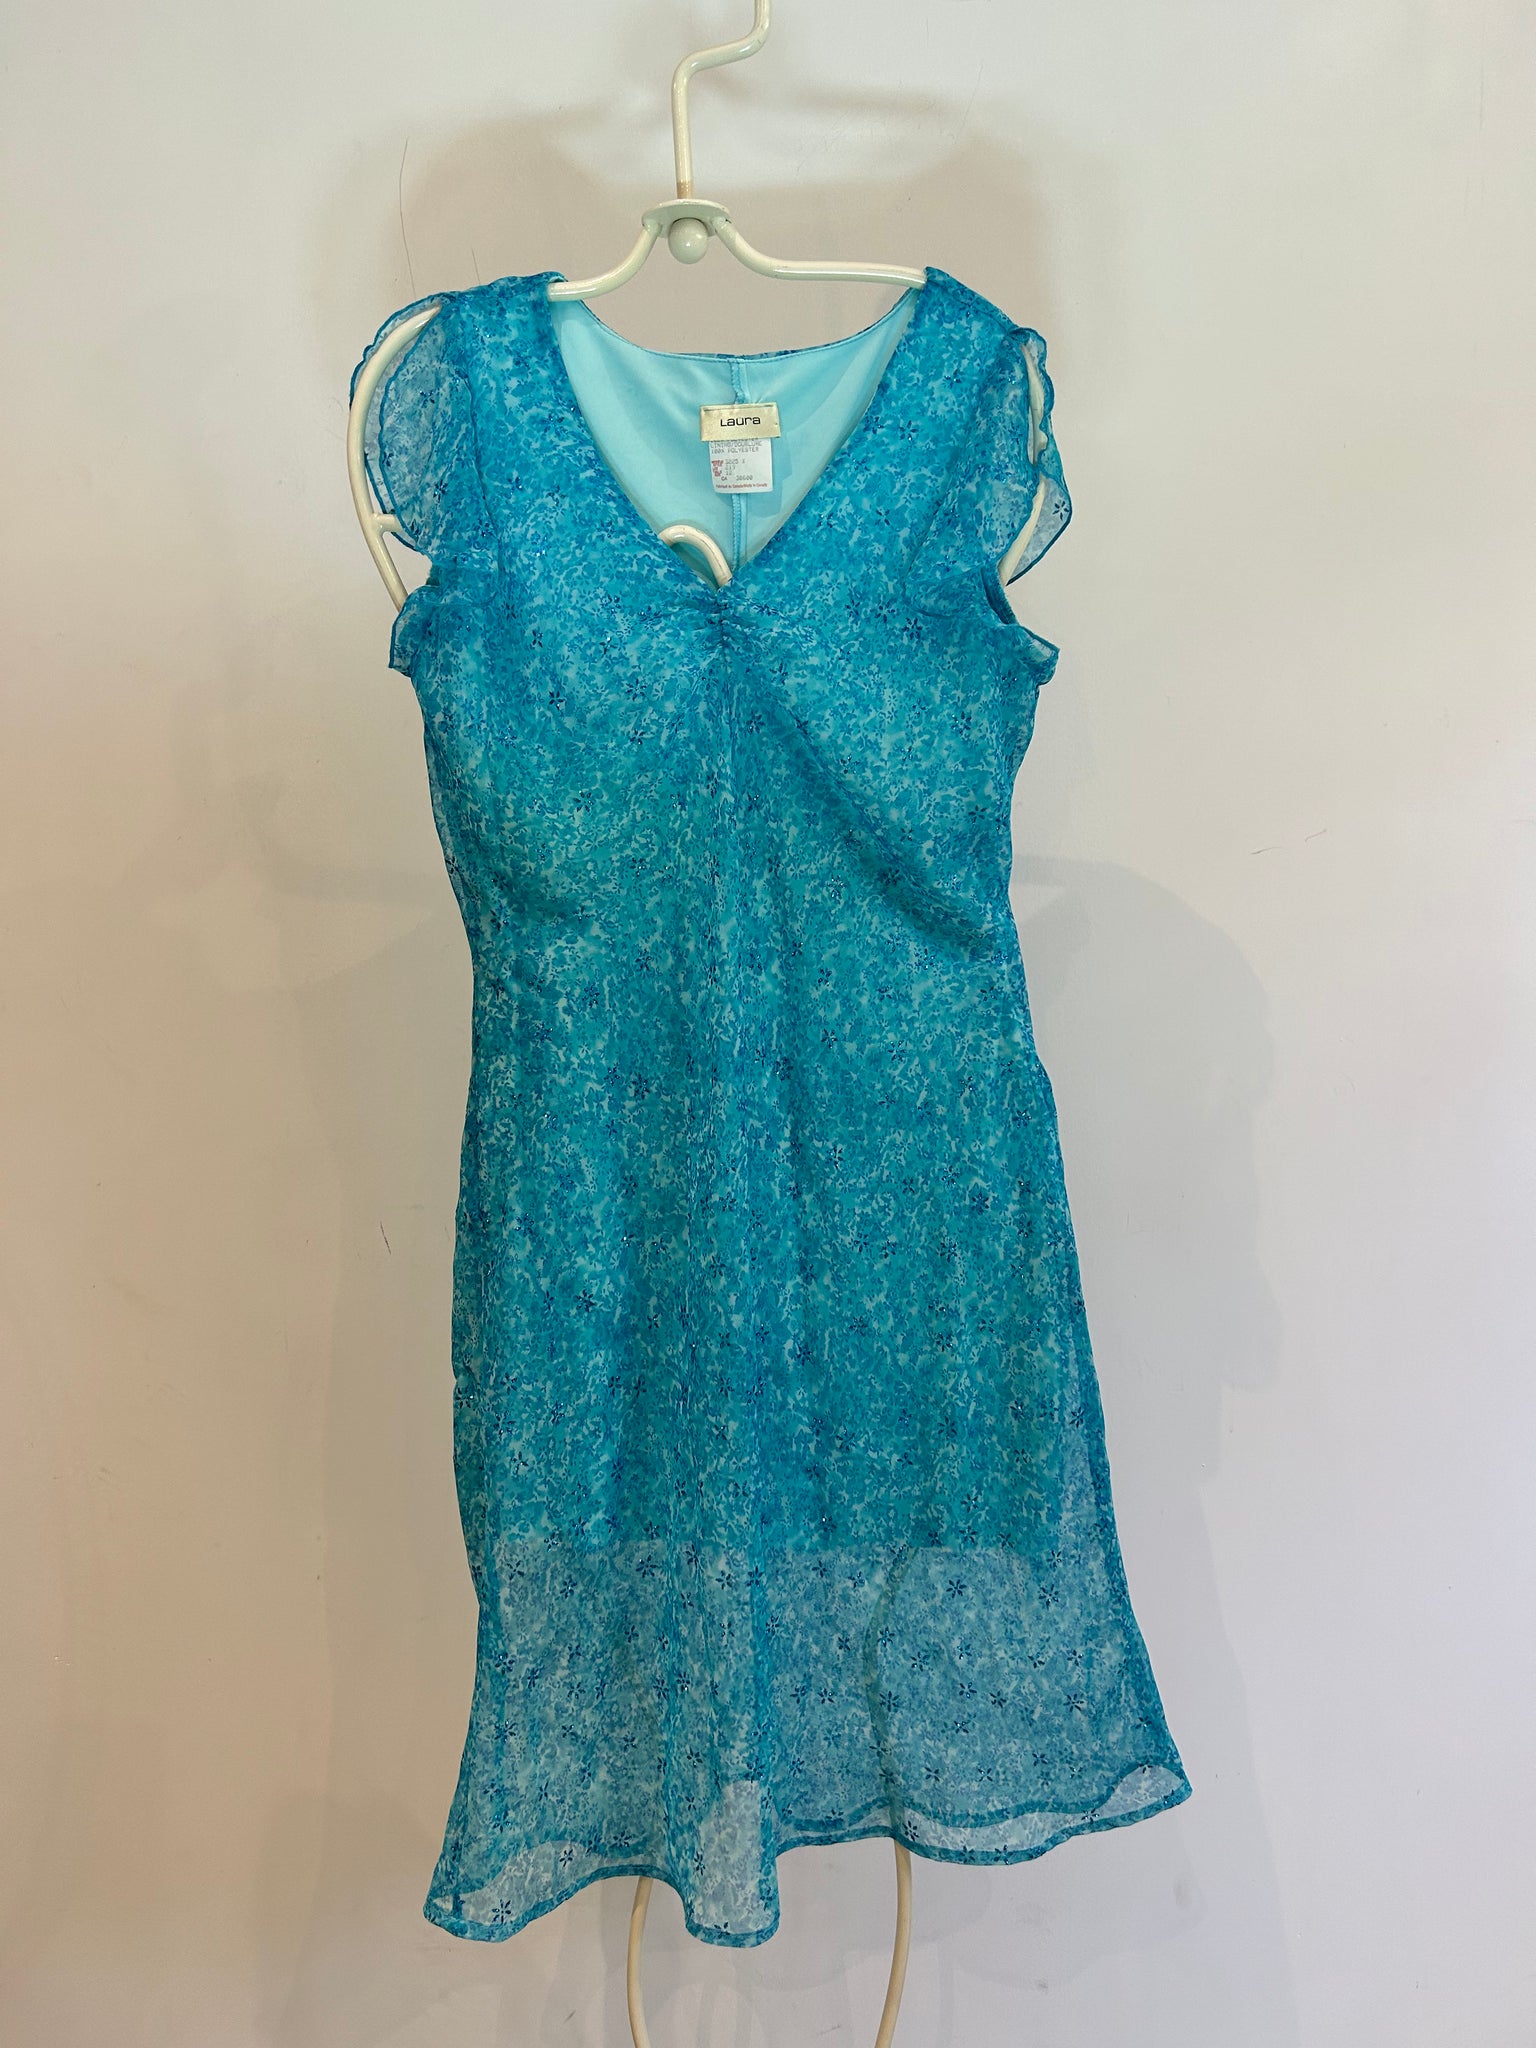 Thrifted vintage & pre-loved lingerie & slip dresses part 1